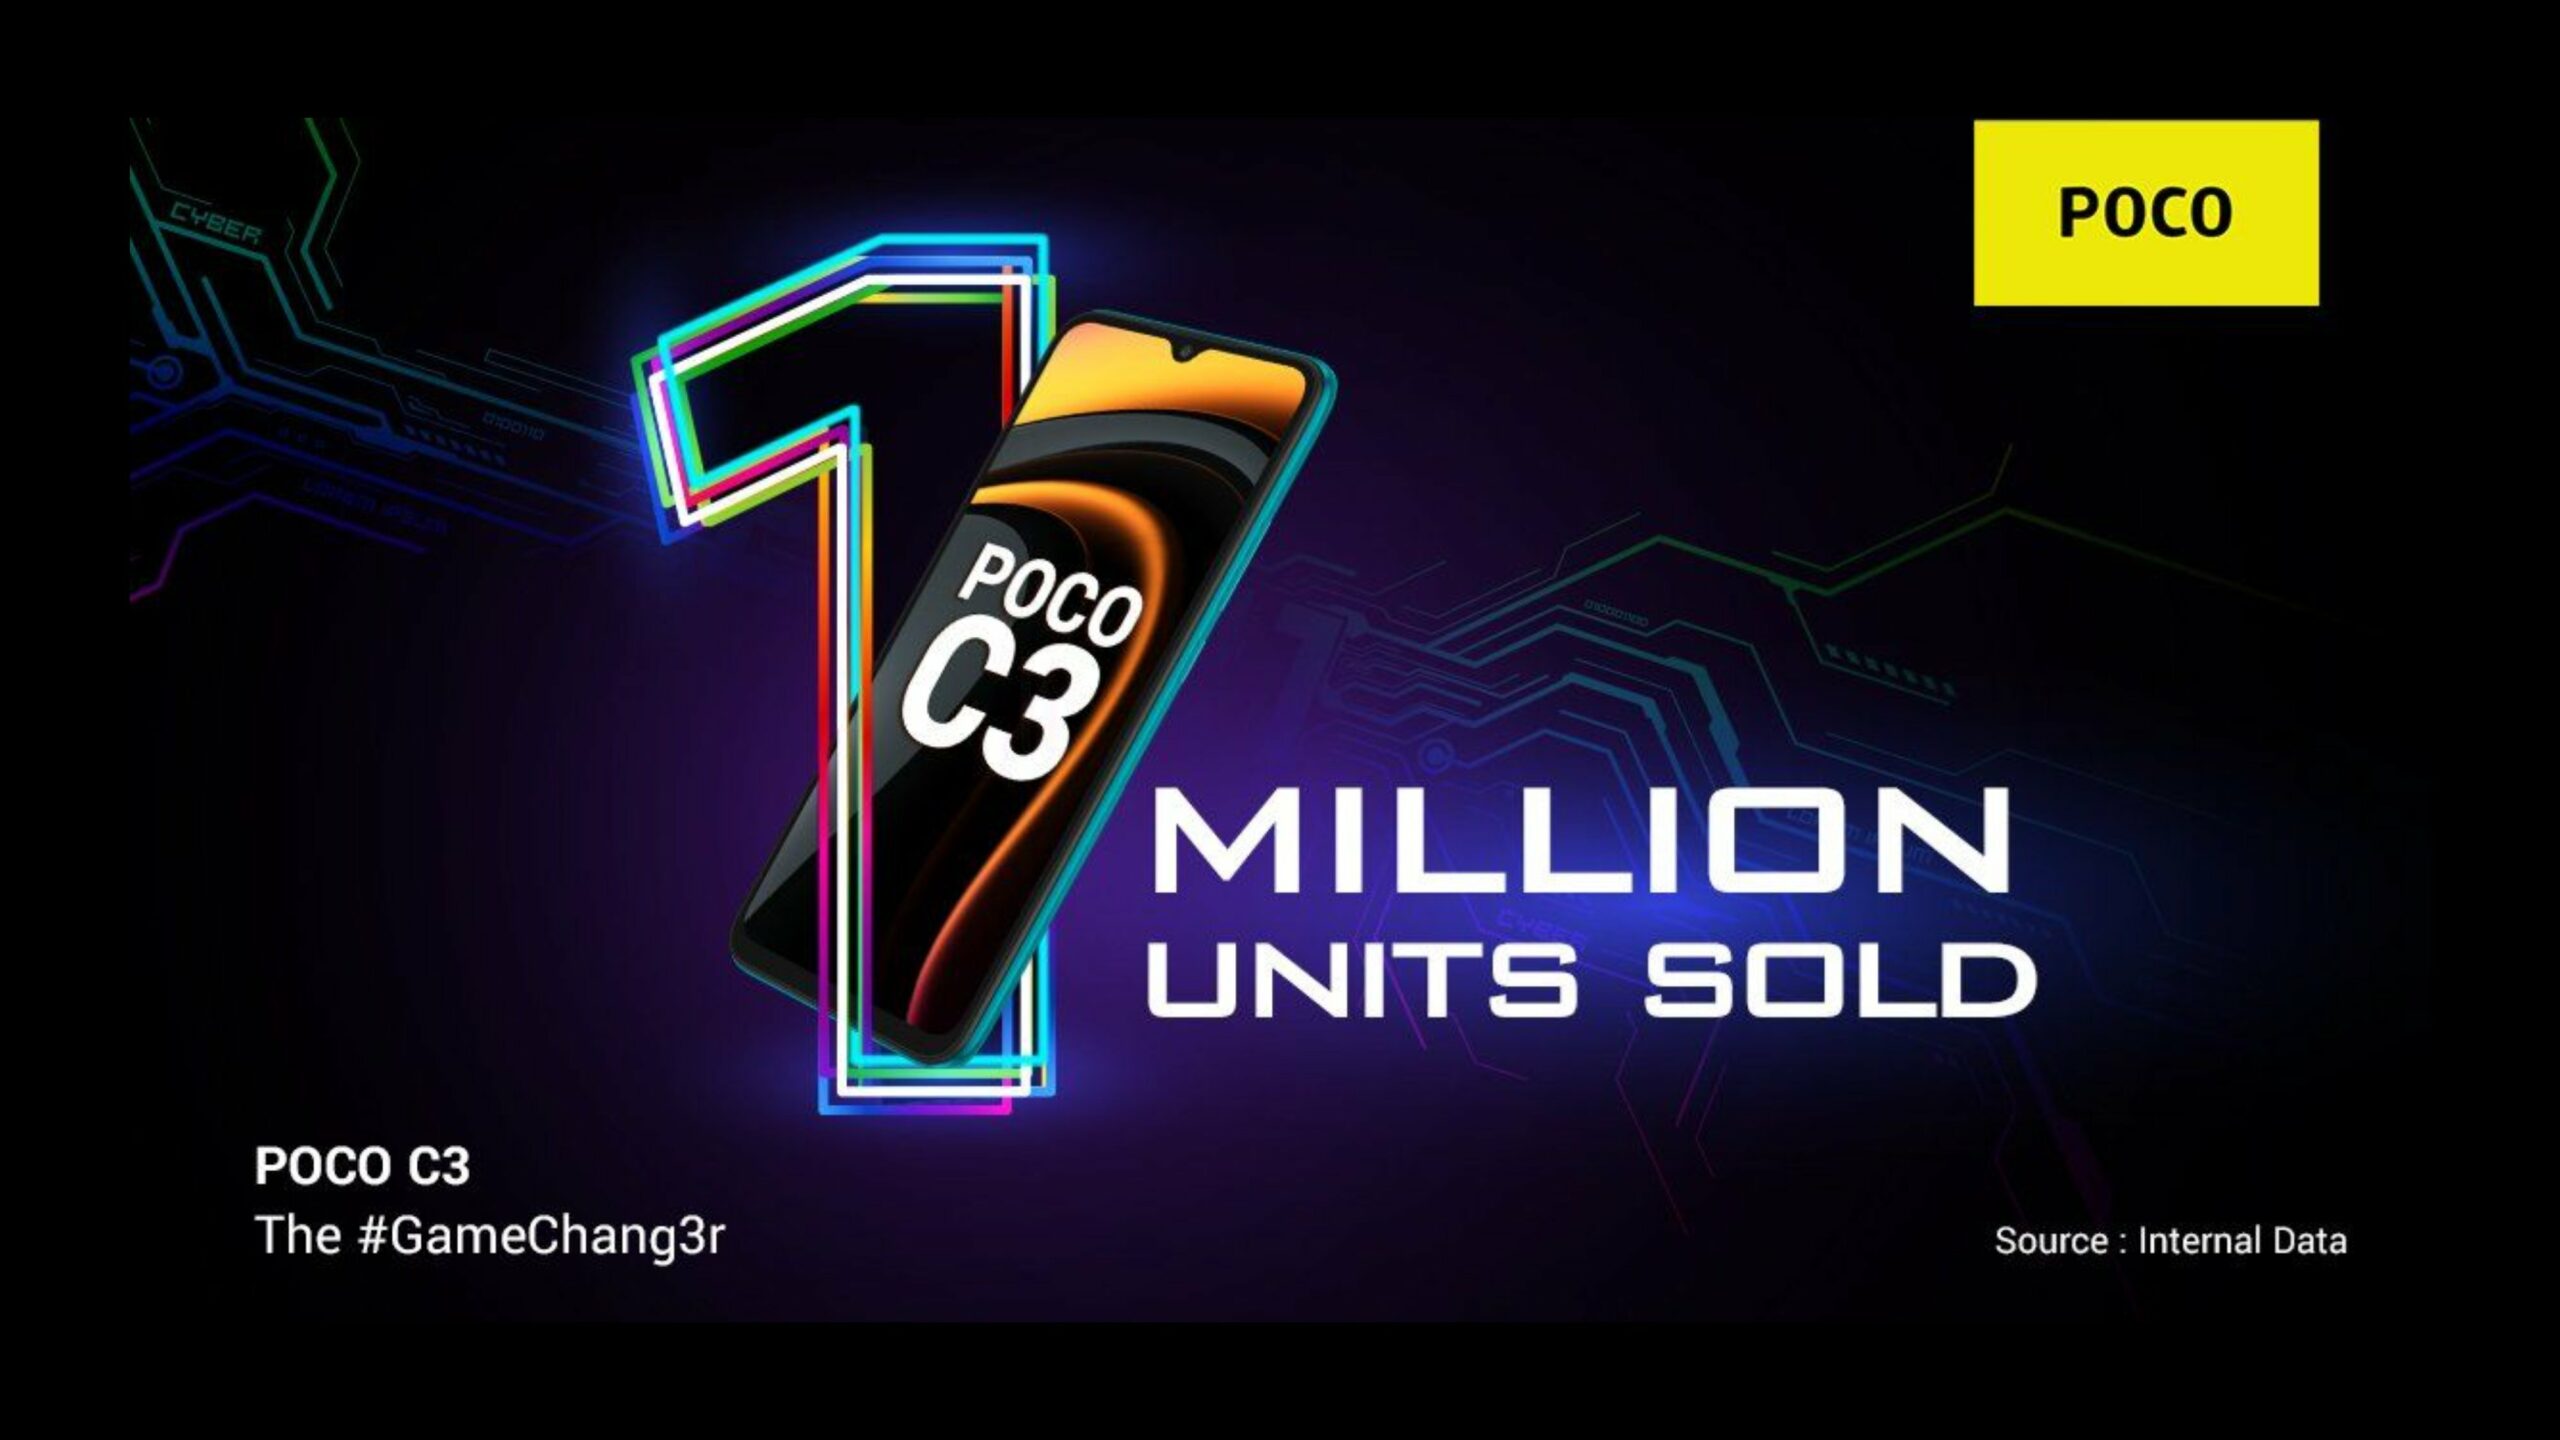 POCO C3 1 Million Units Sold Featured